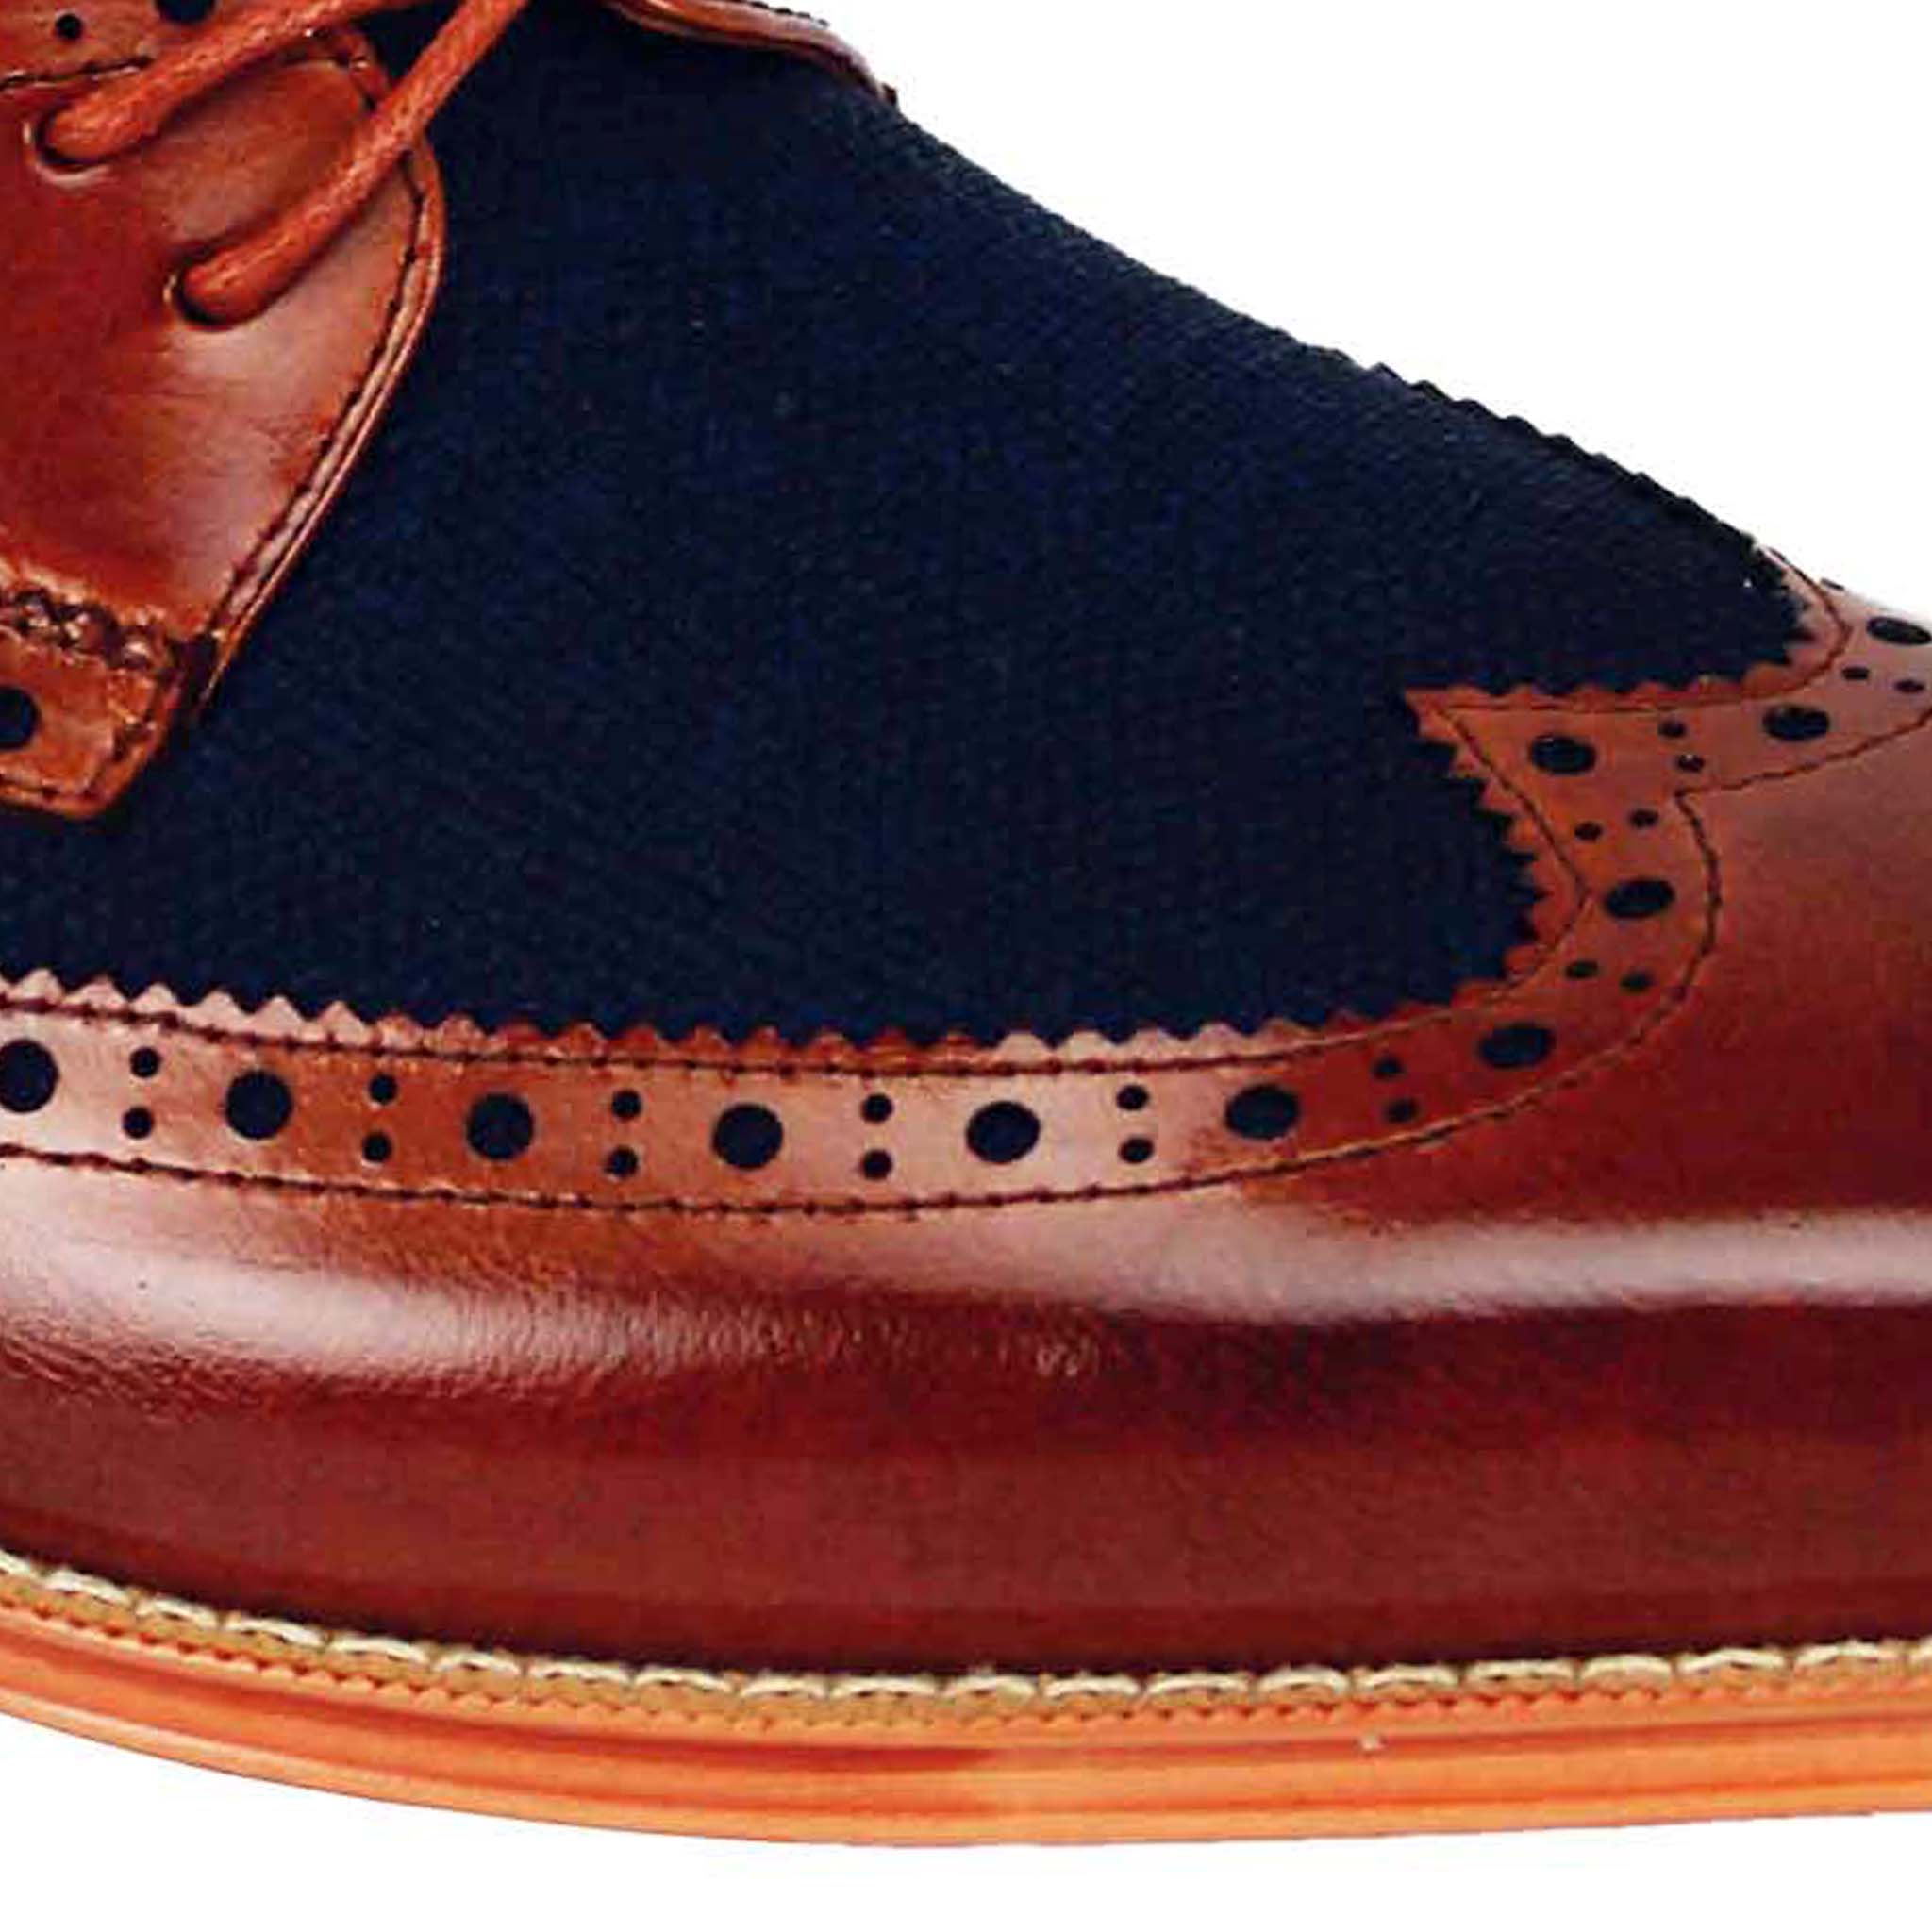 Giovanni Cognac Linen Wingtip Shoe